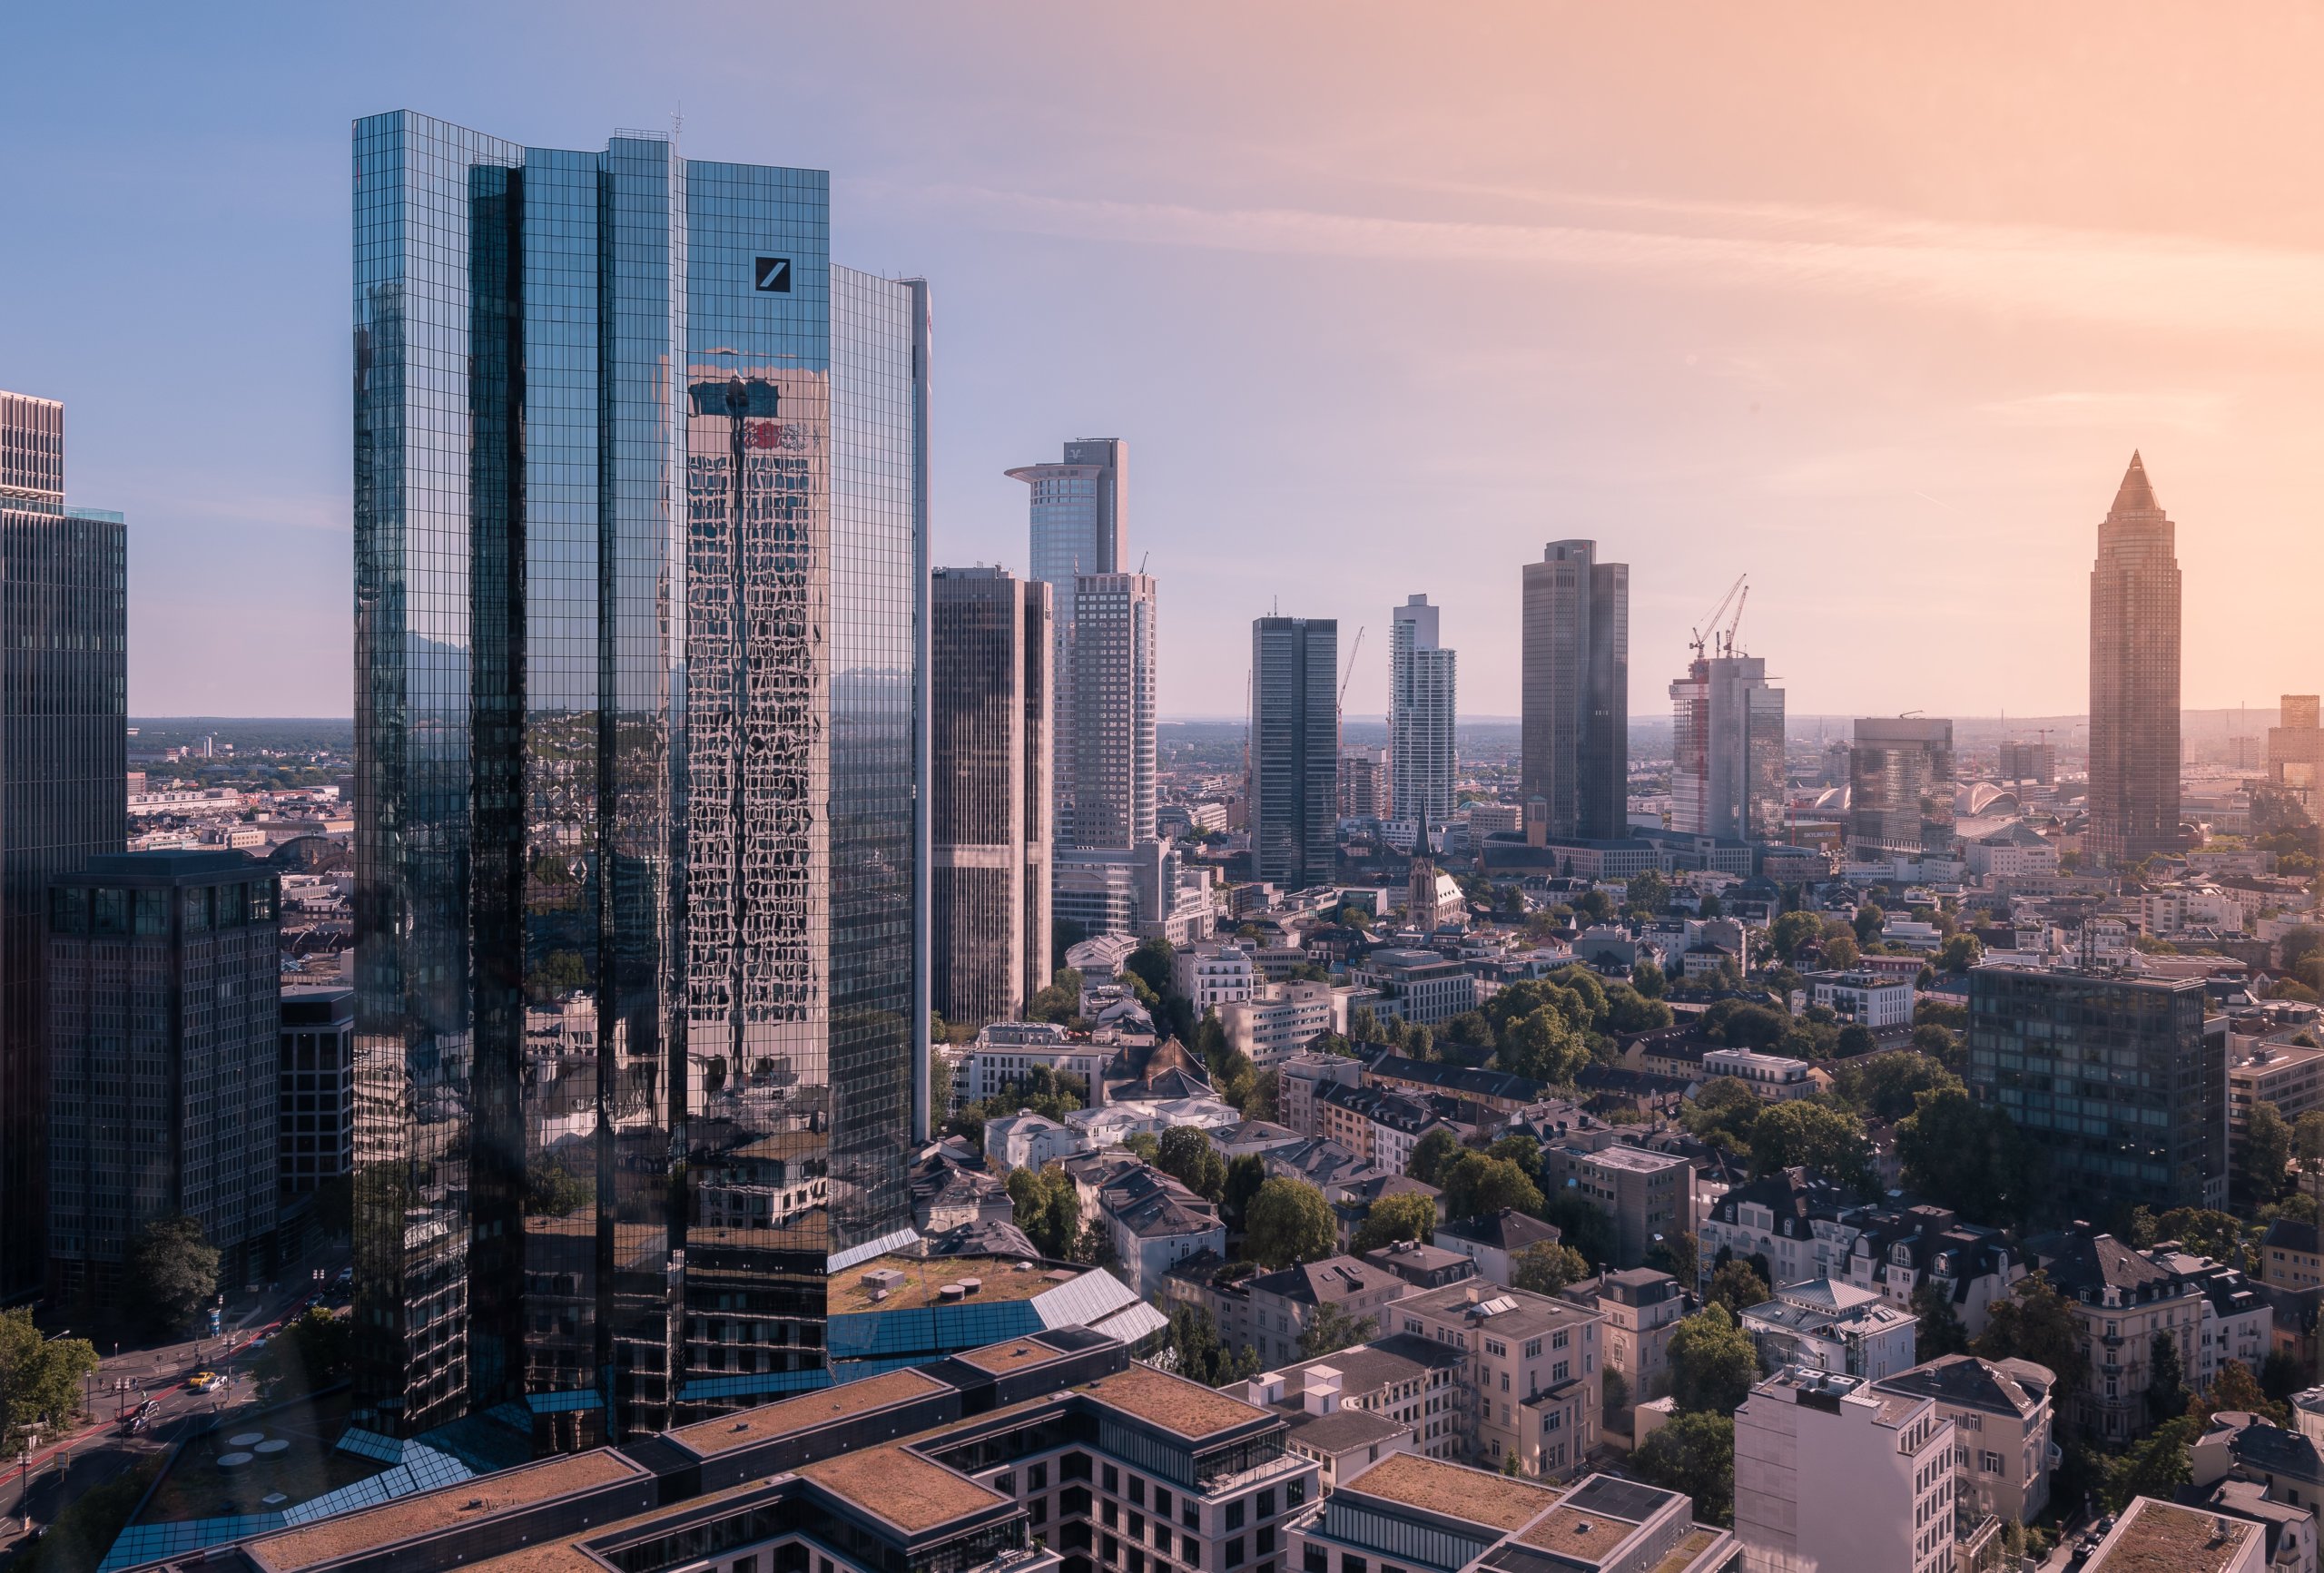 Deutsche Bank HQ in Frankfurt